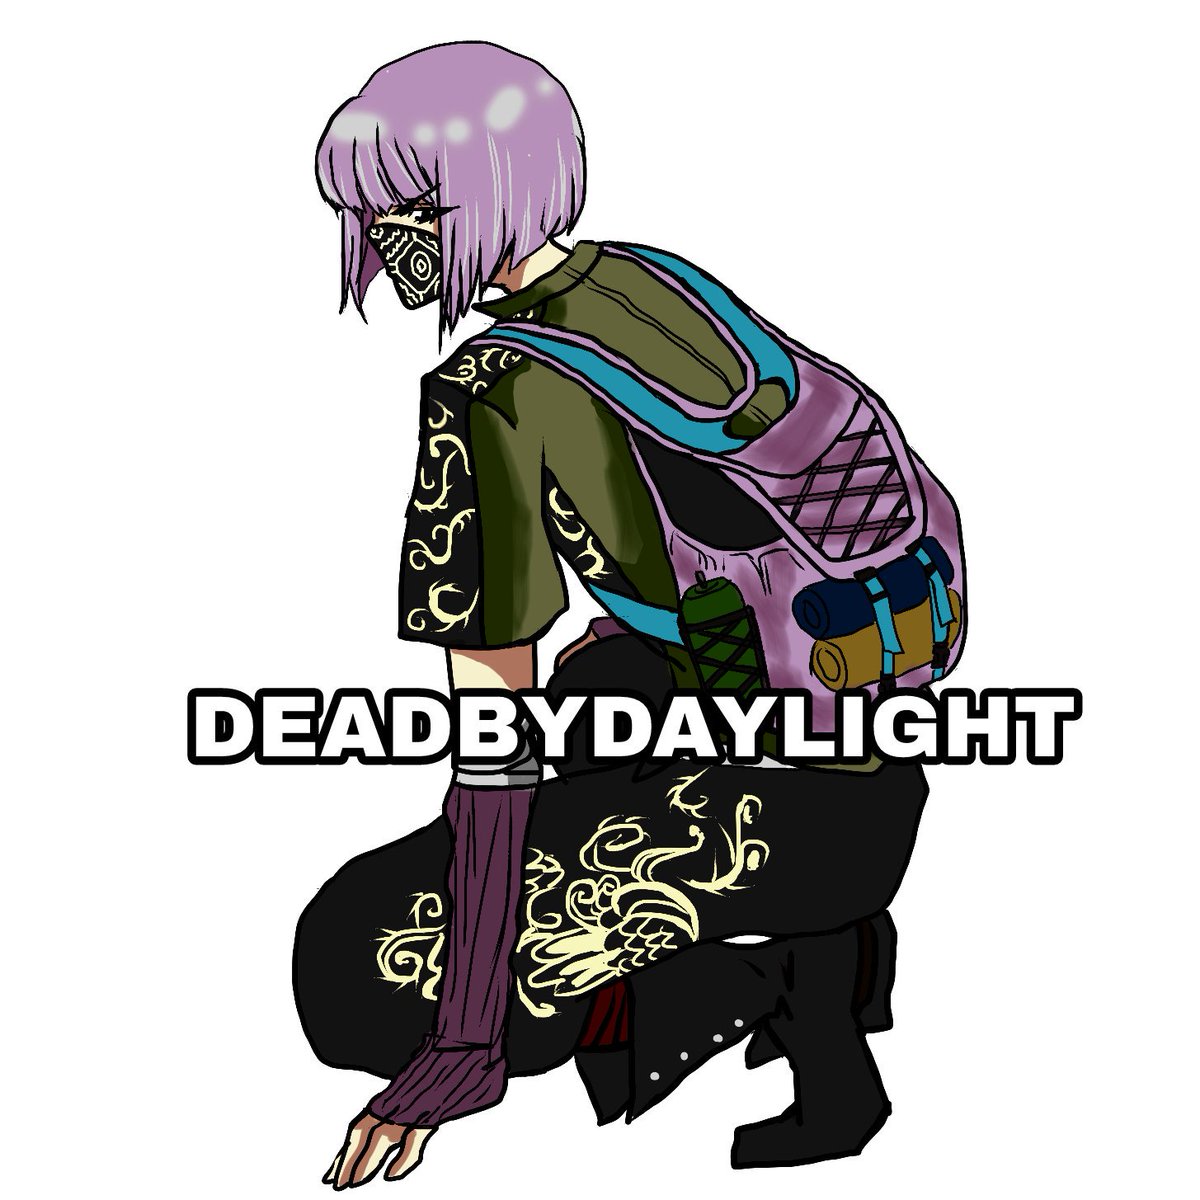 Itokichi03 ネア Deadbydaylight Dbd デッドバイデイライト イラスト ネア